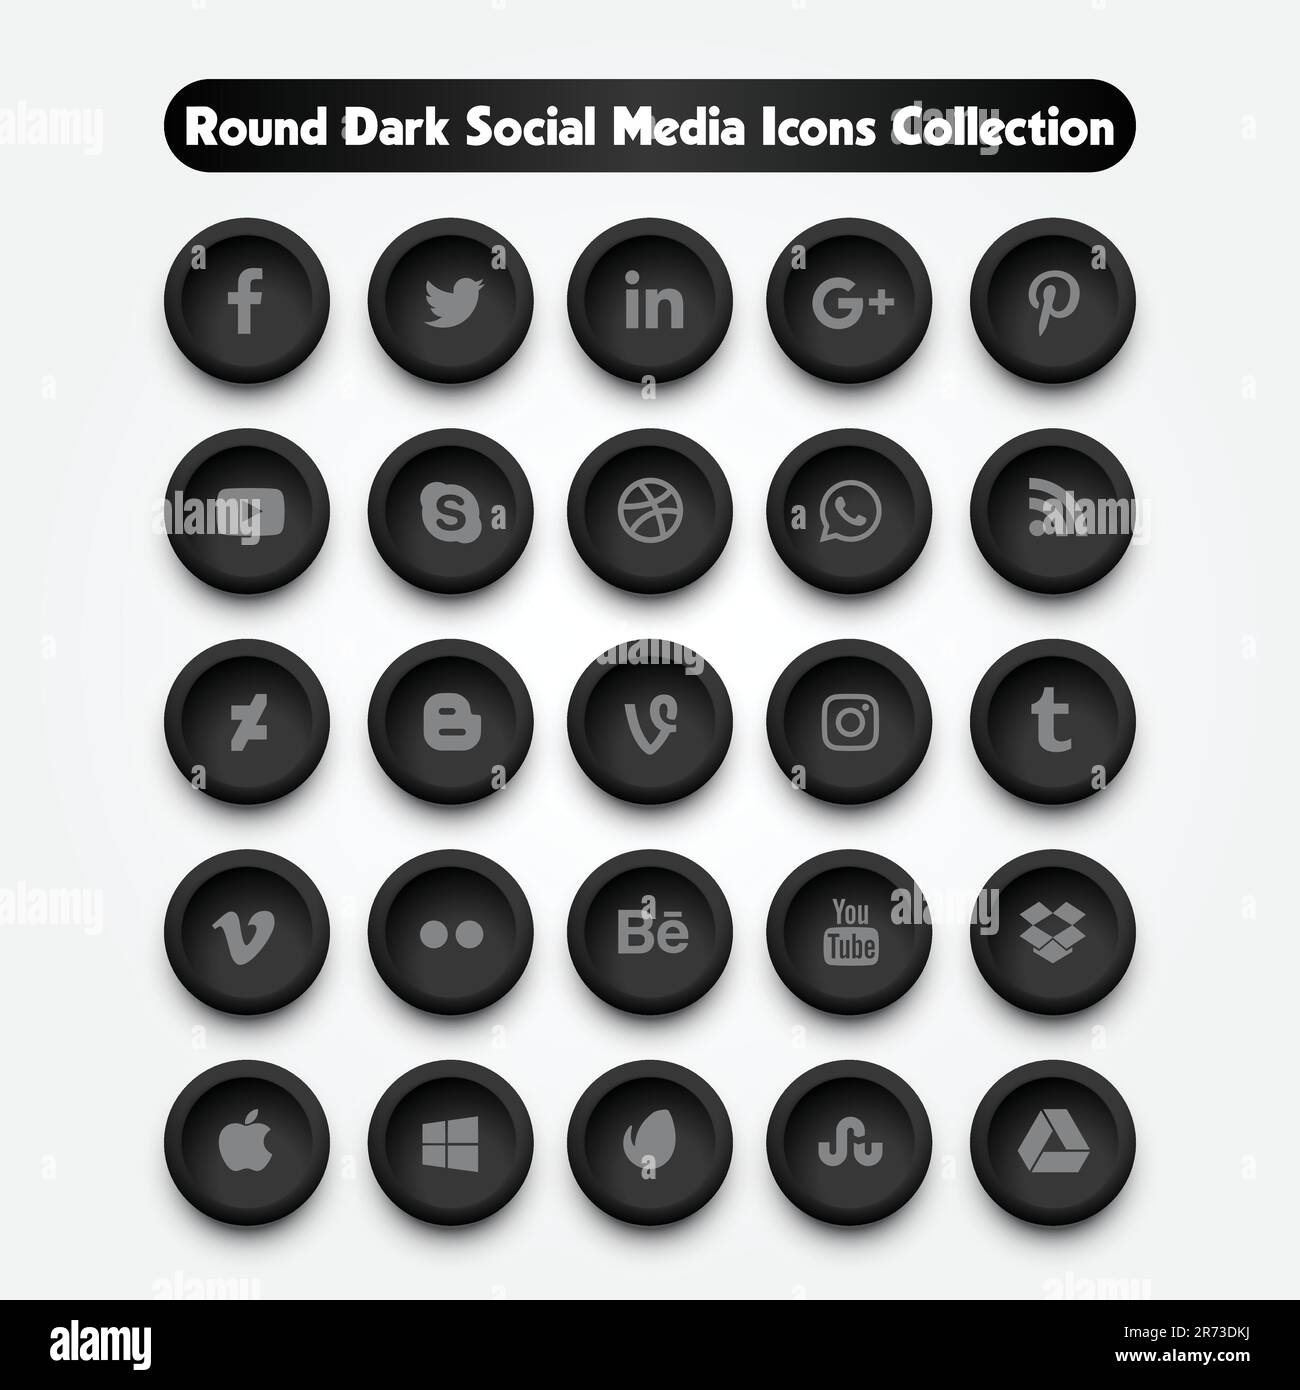 Round Dark Social Media Icons Collection Stock Vector